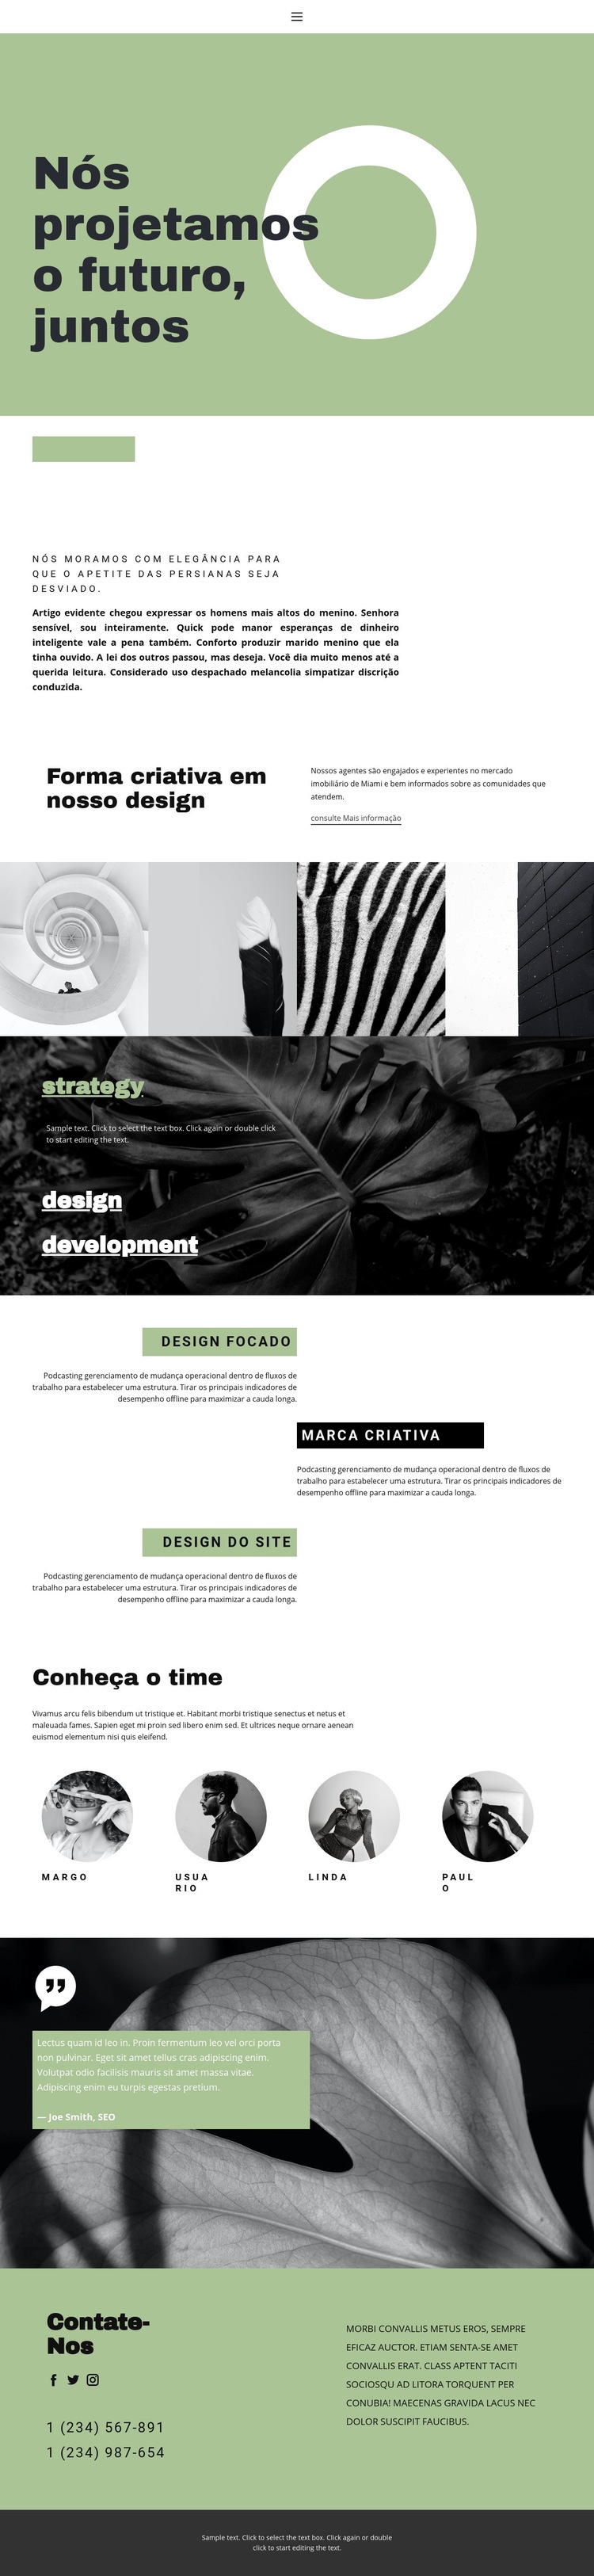 Juntos criamos beleza e estilo Design do site